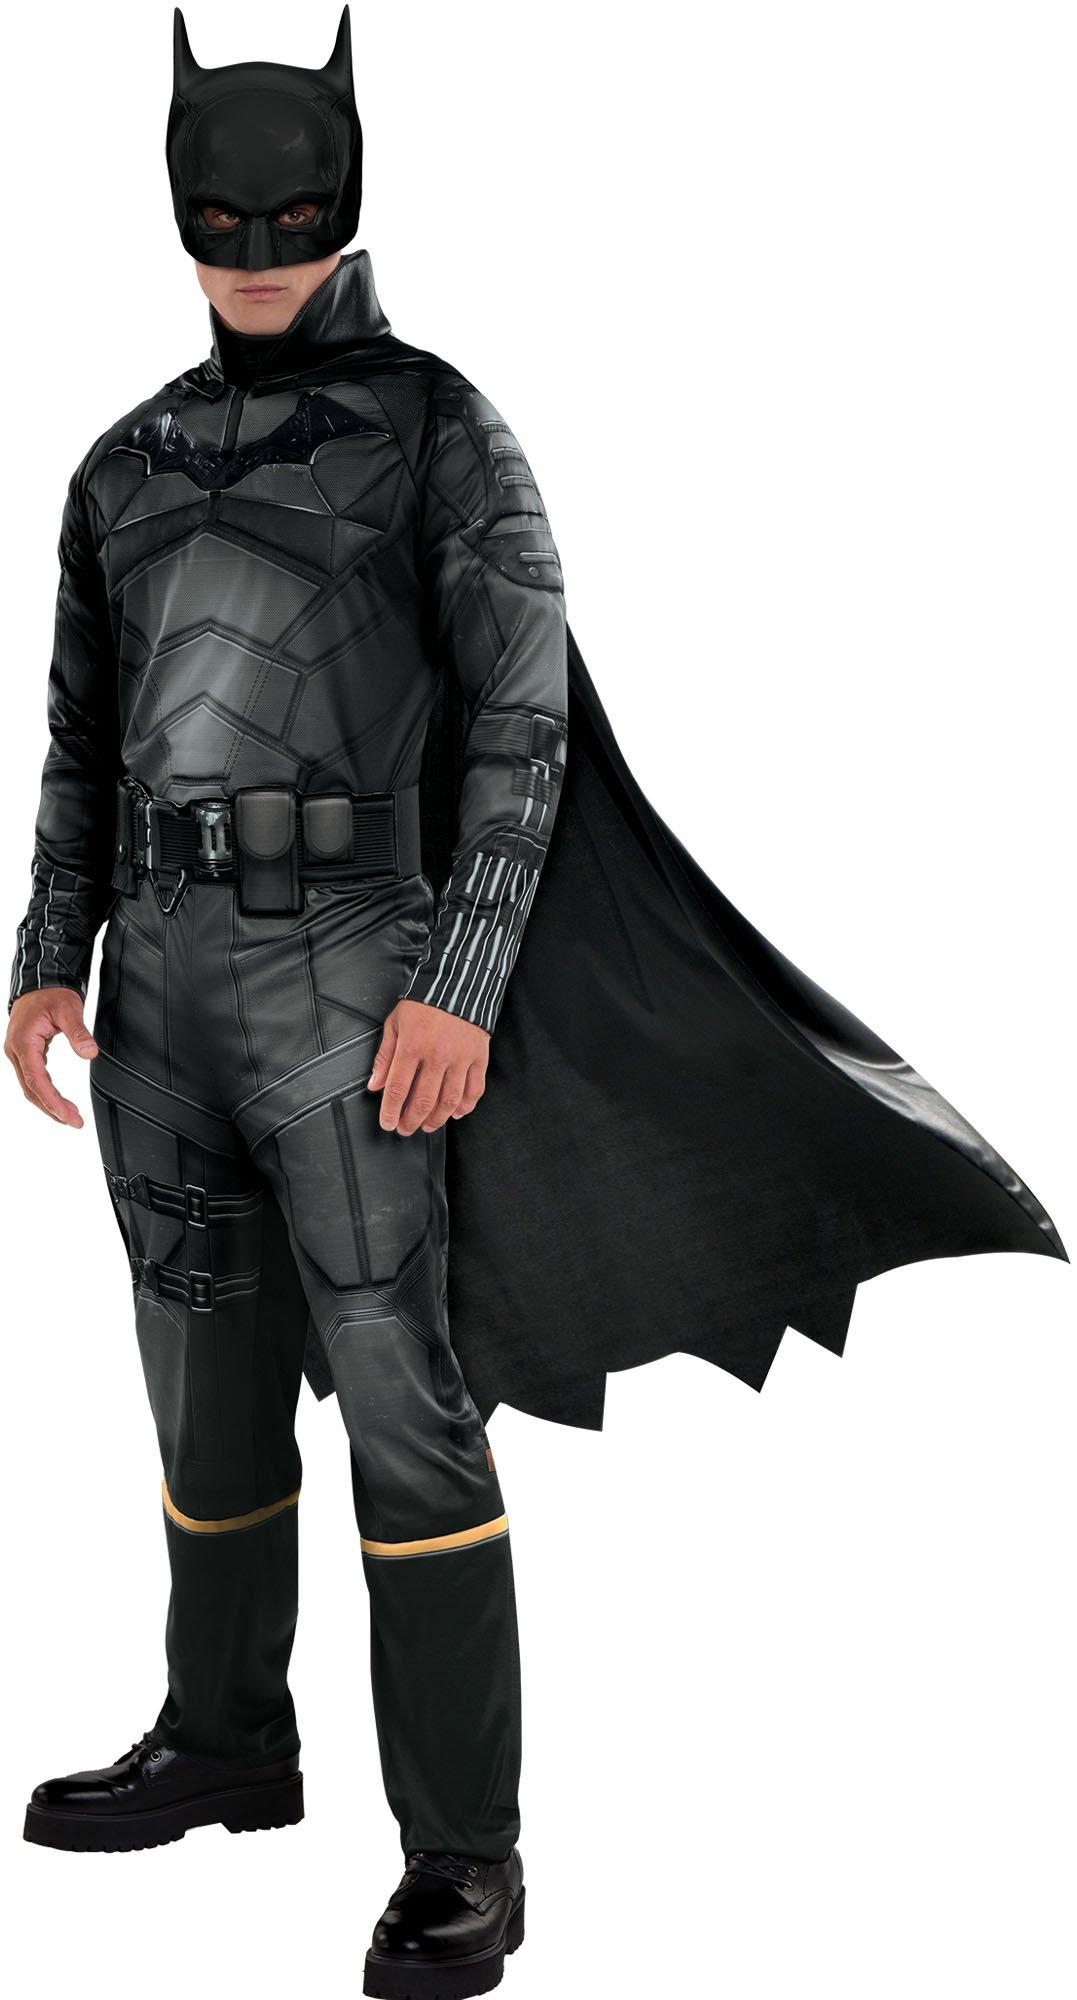 The batman costume